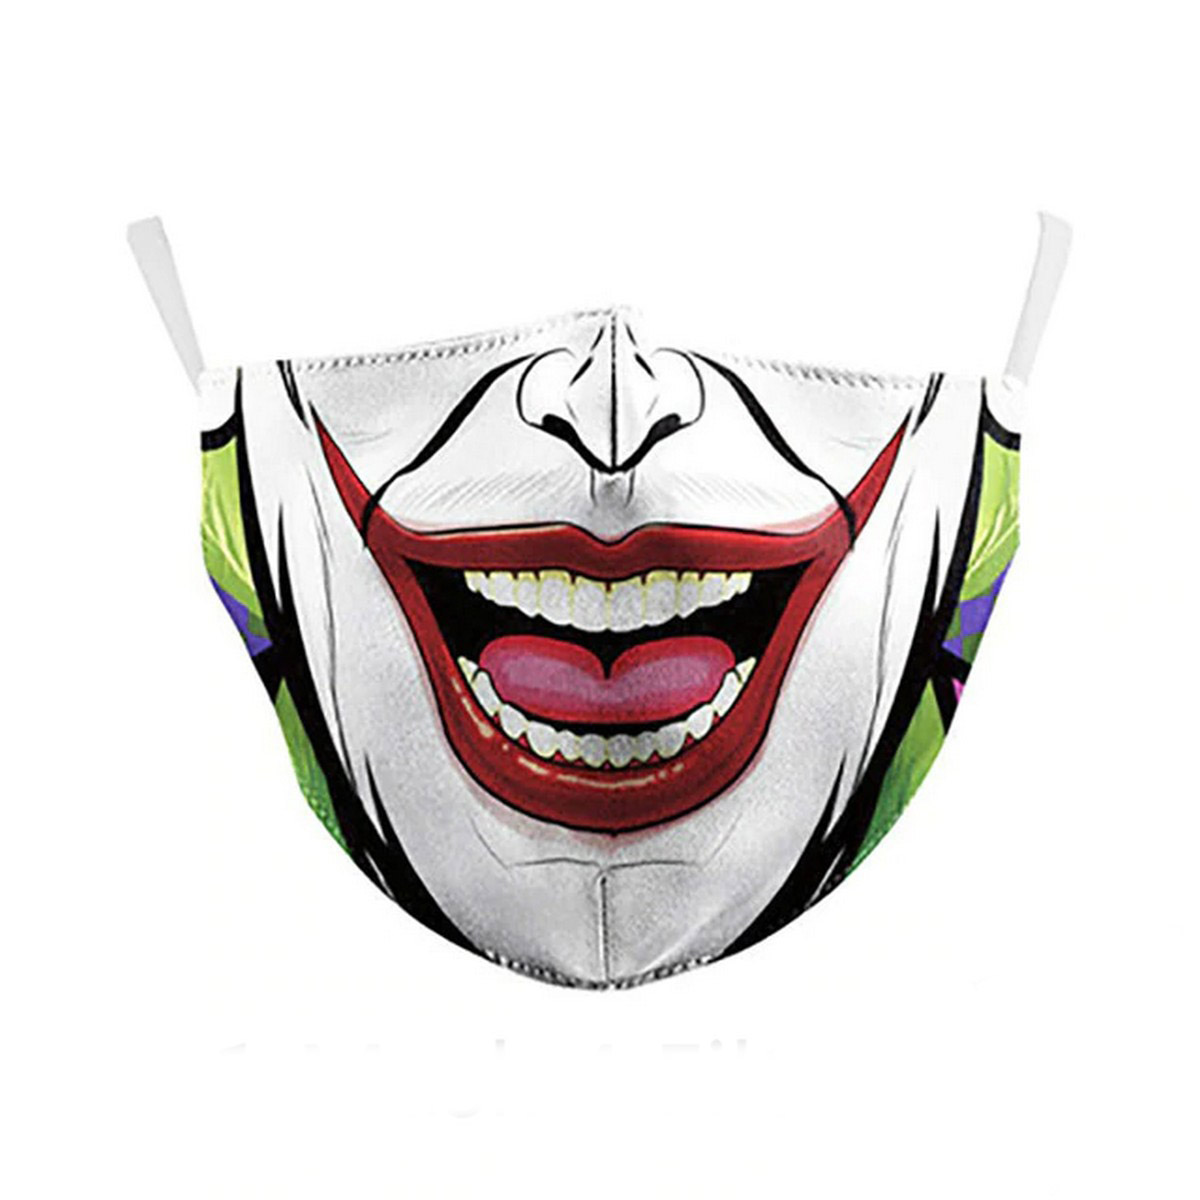 JOKER maska (rouška) na obličej - 100% polyester